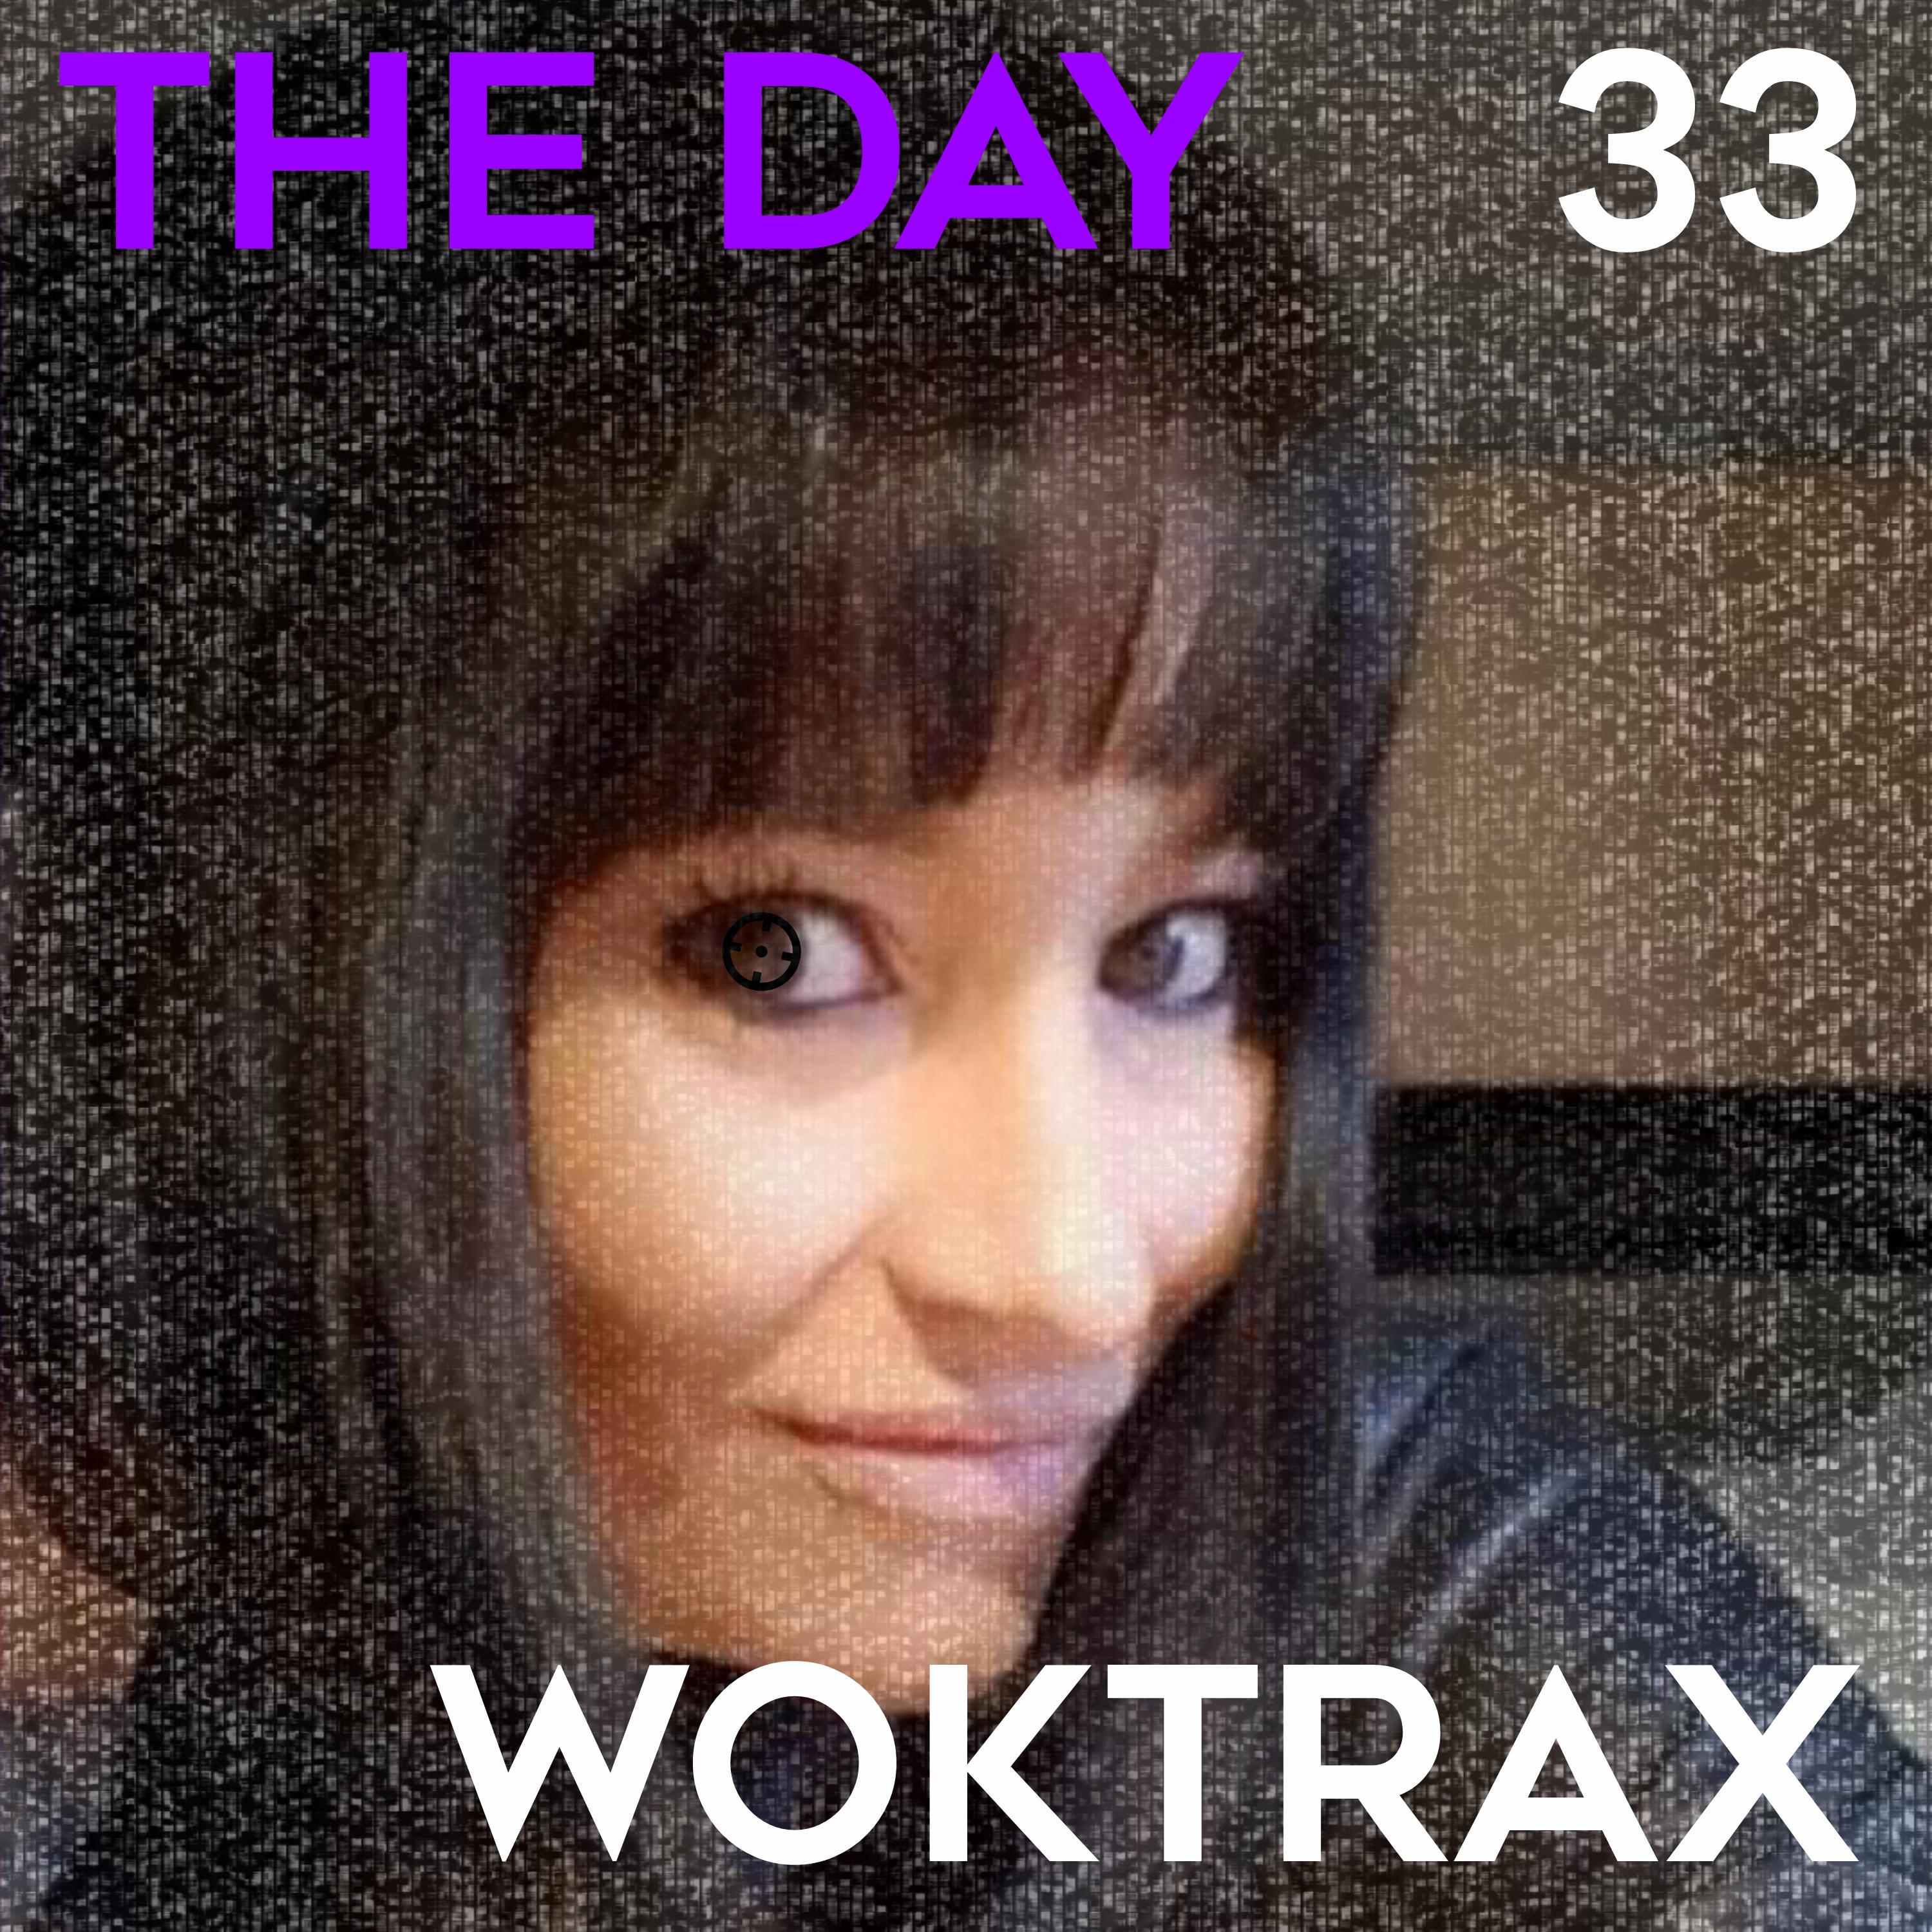 Woktrax - Wanda's Day